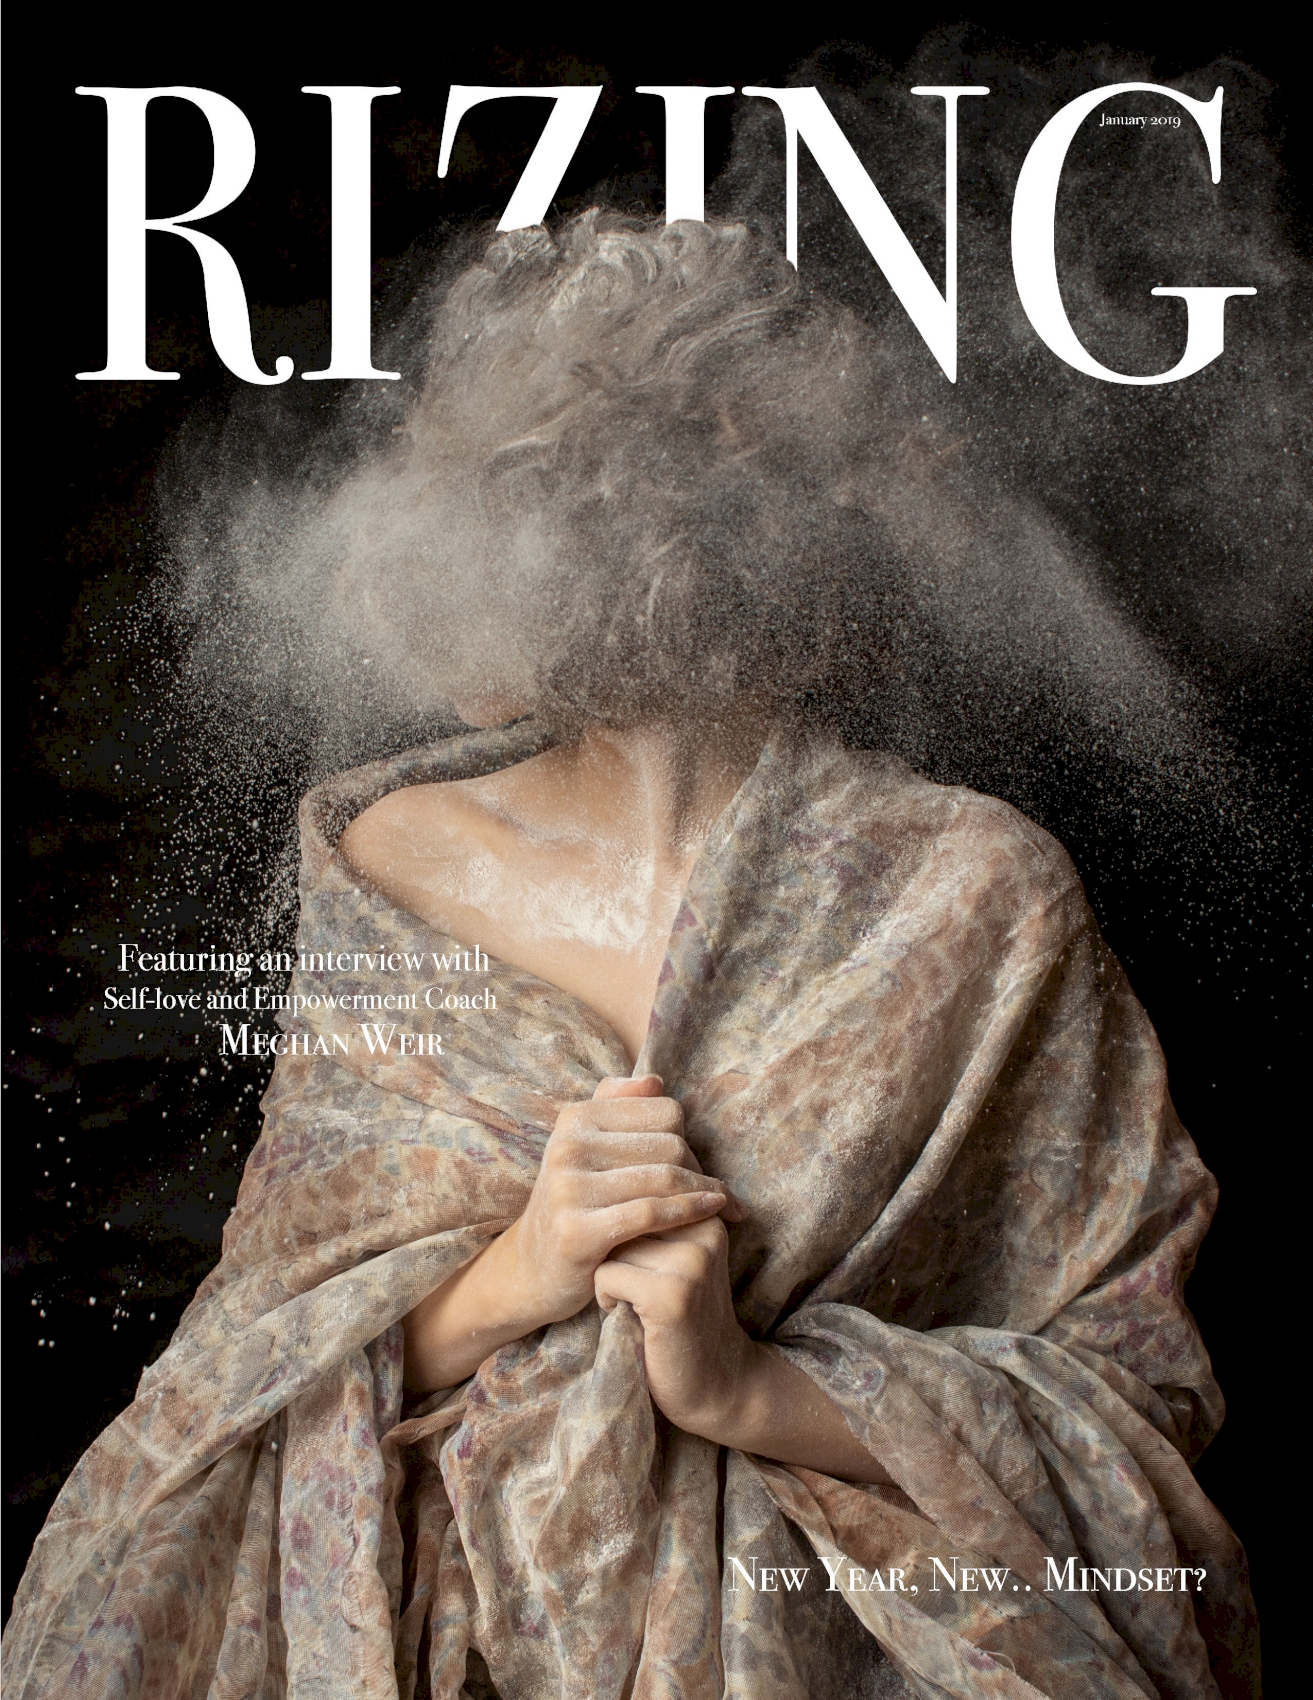 RIZING MAGAZINE - January Issue Cover